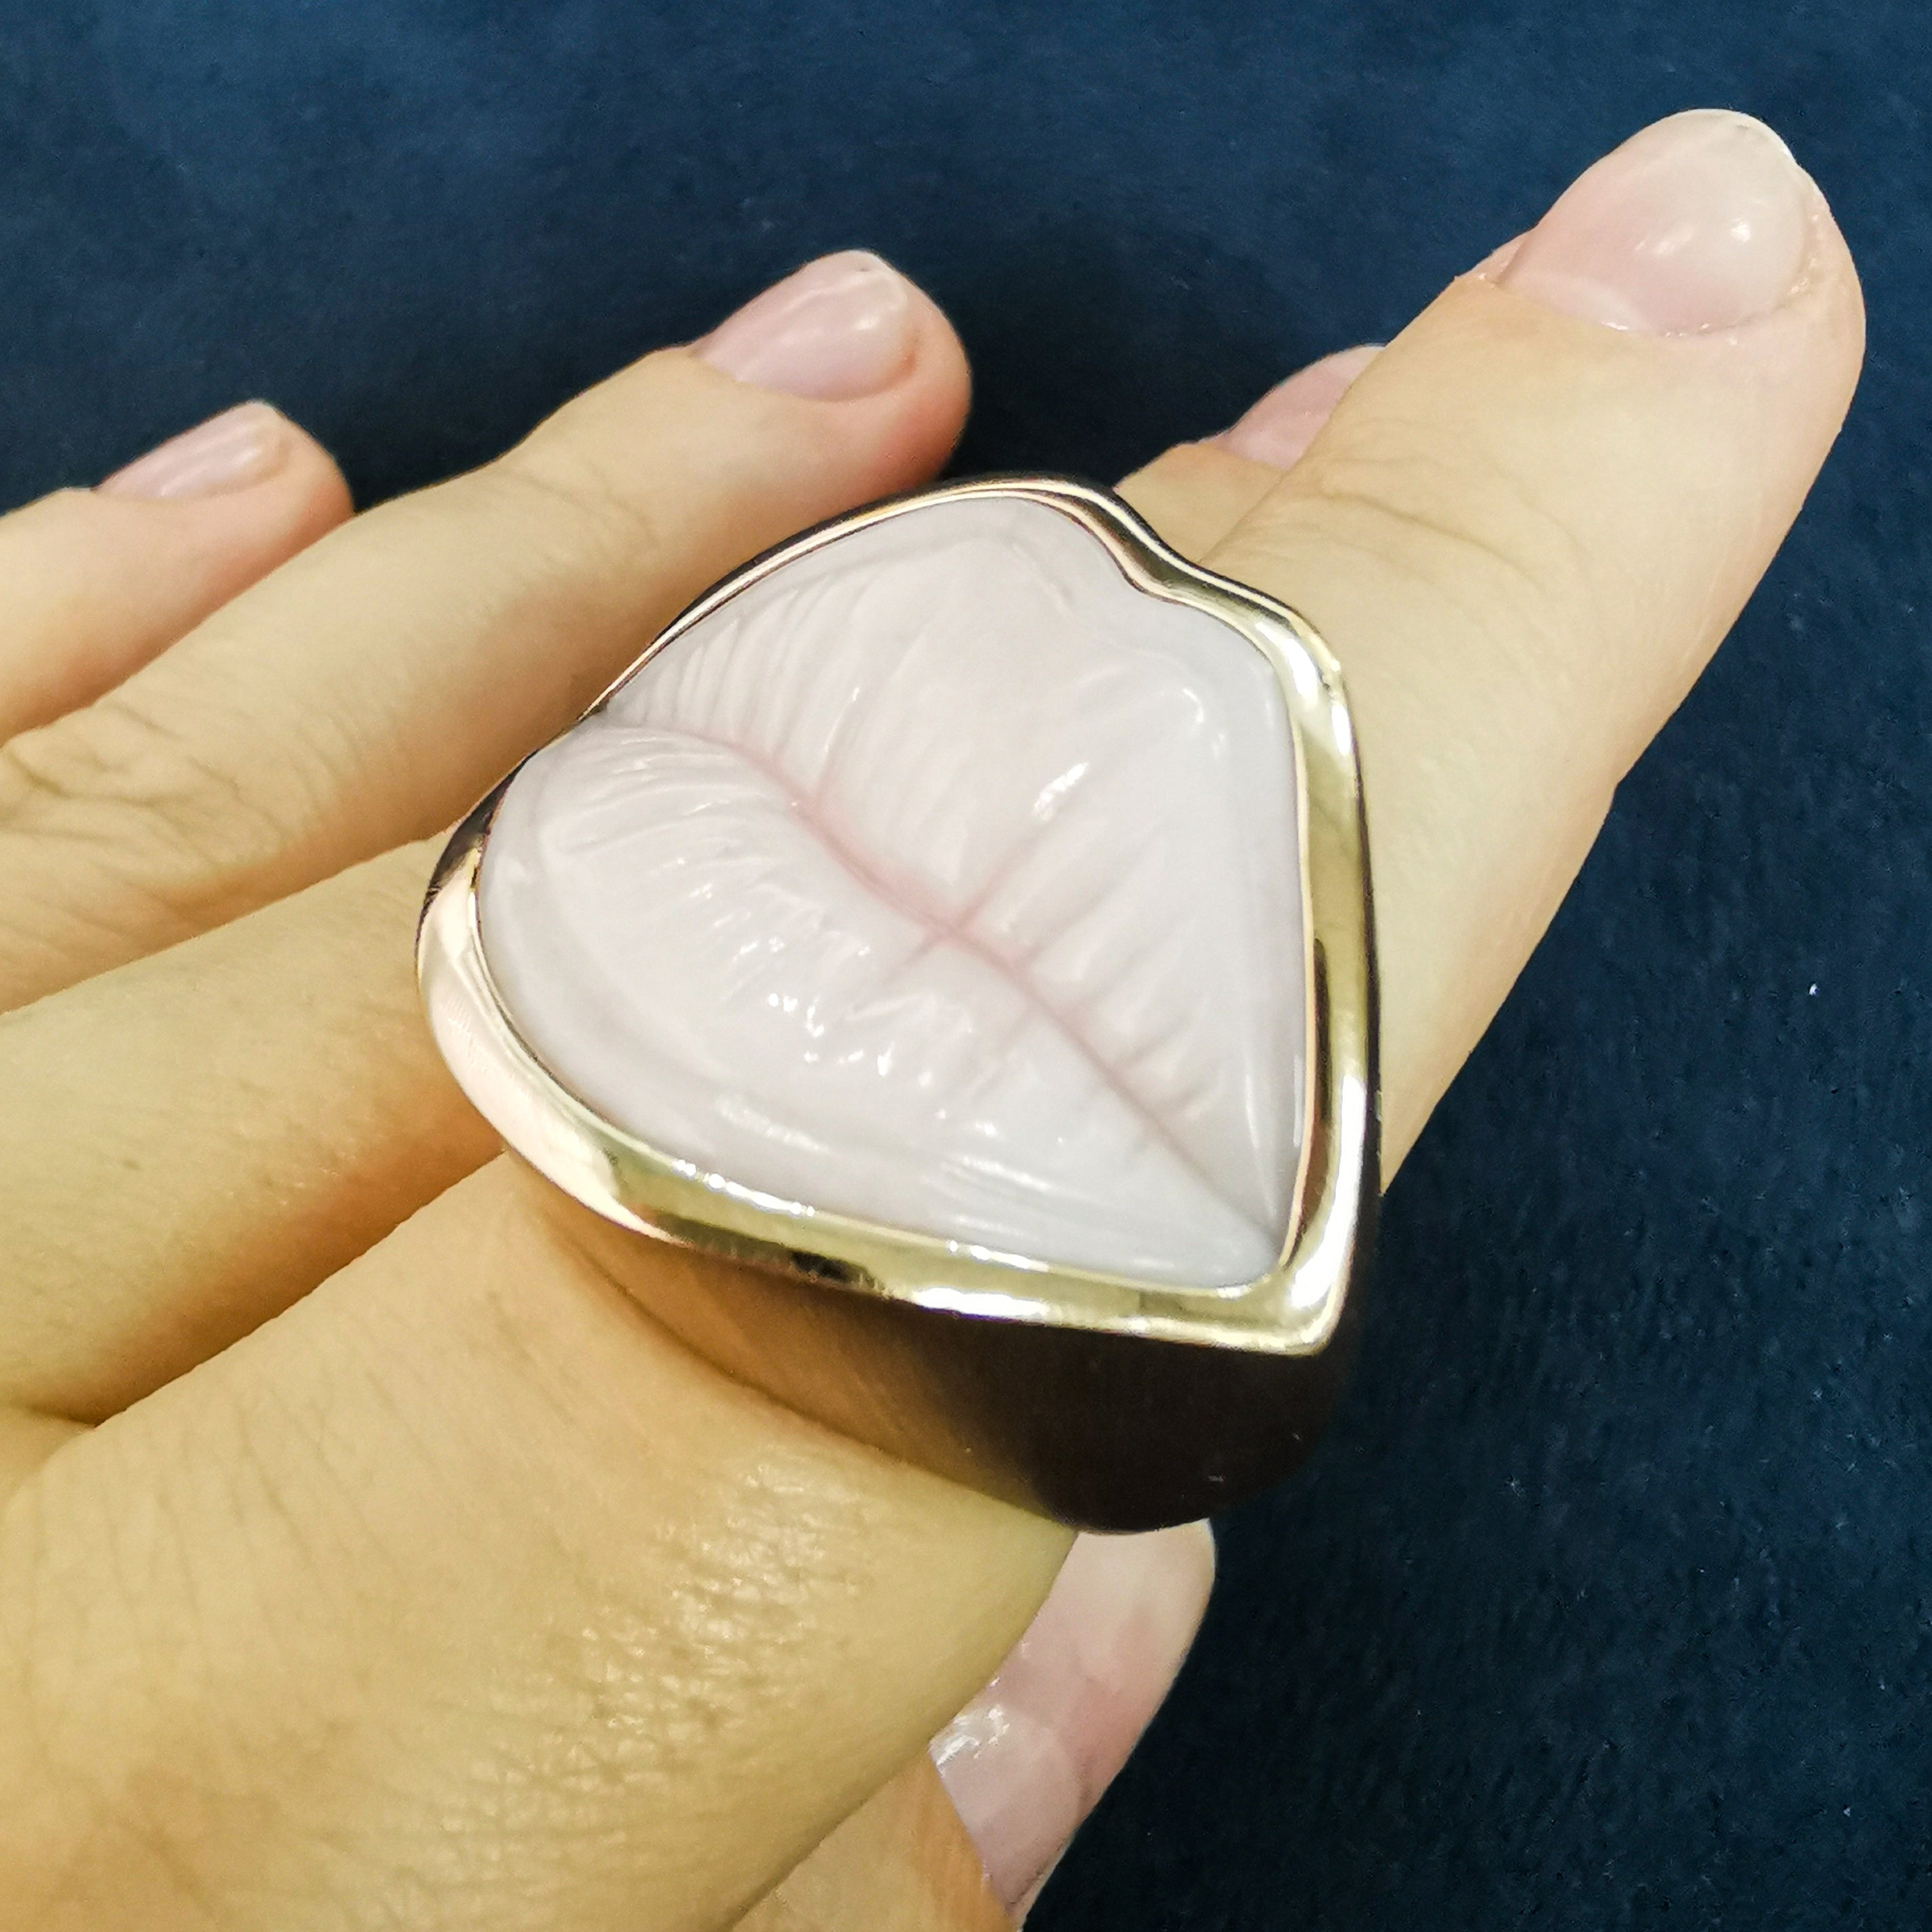 R 0077-1, 18K Rose Gold, Carved Pink Opal, Diamonds Ring